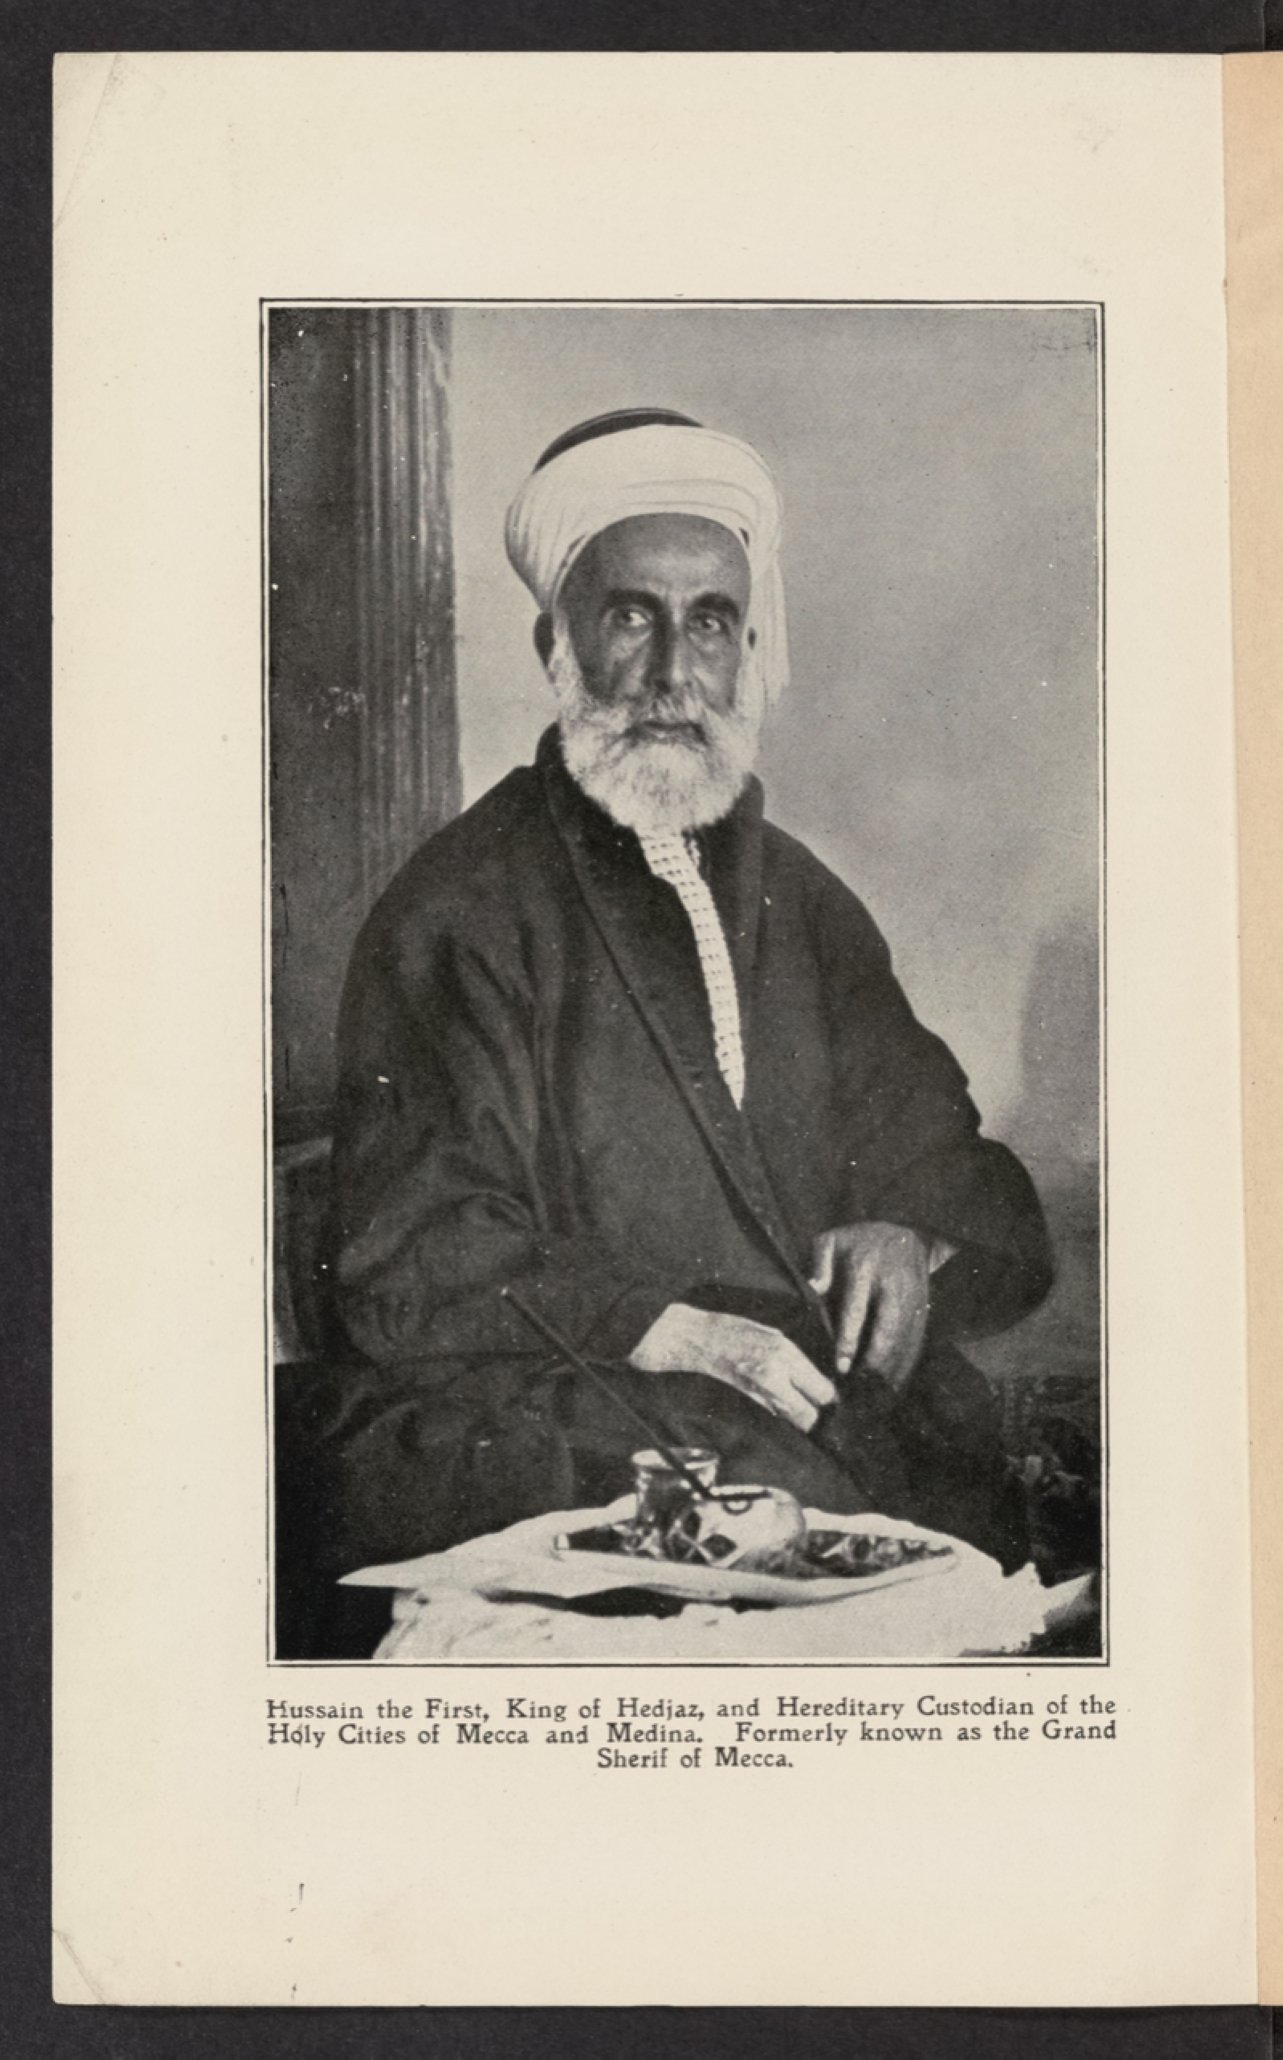 Hussein bin Ali Al-Hashimi in 1916. (Wikimedia)